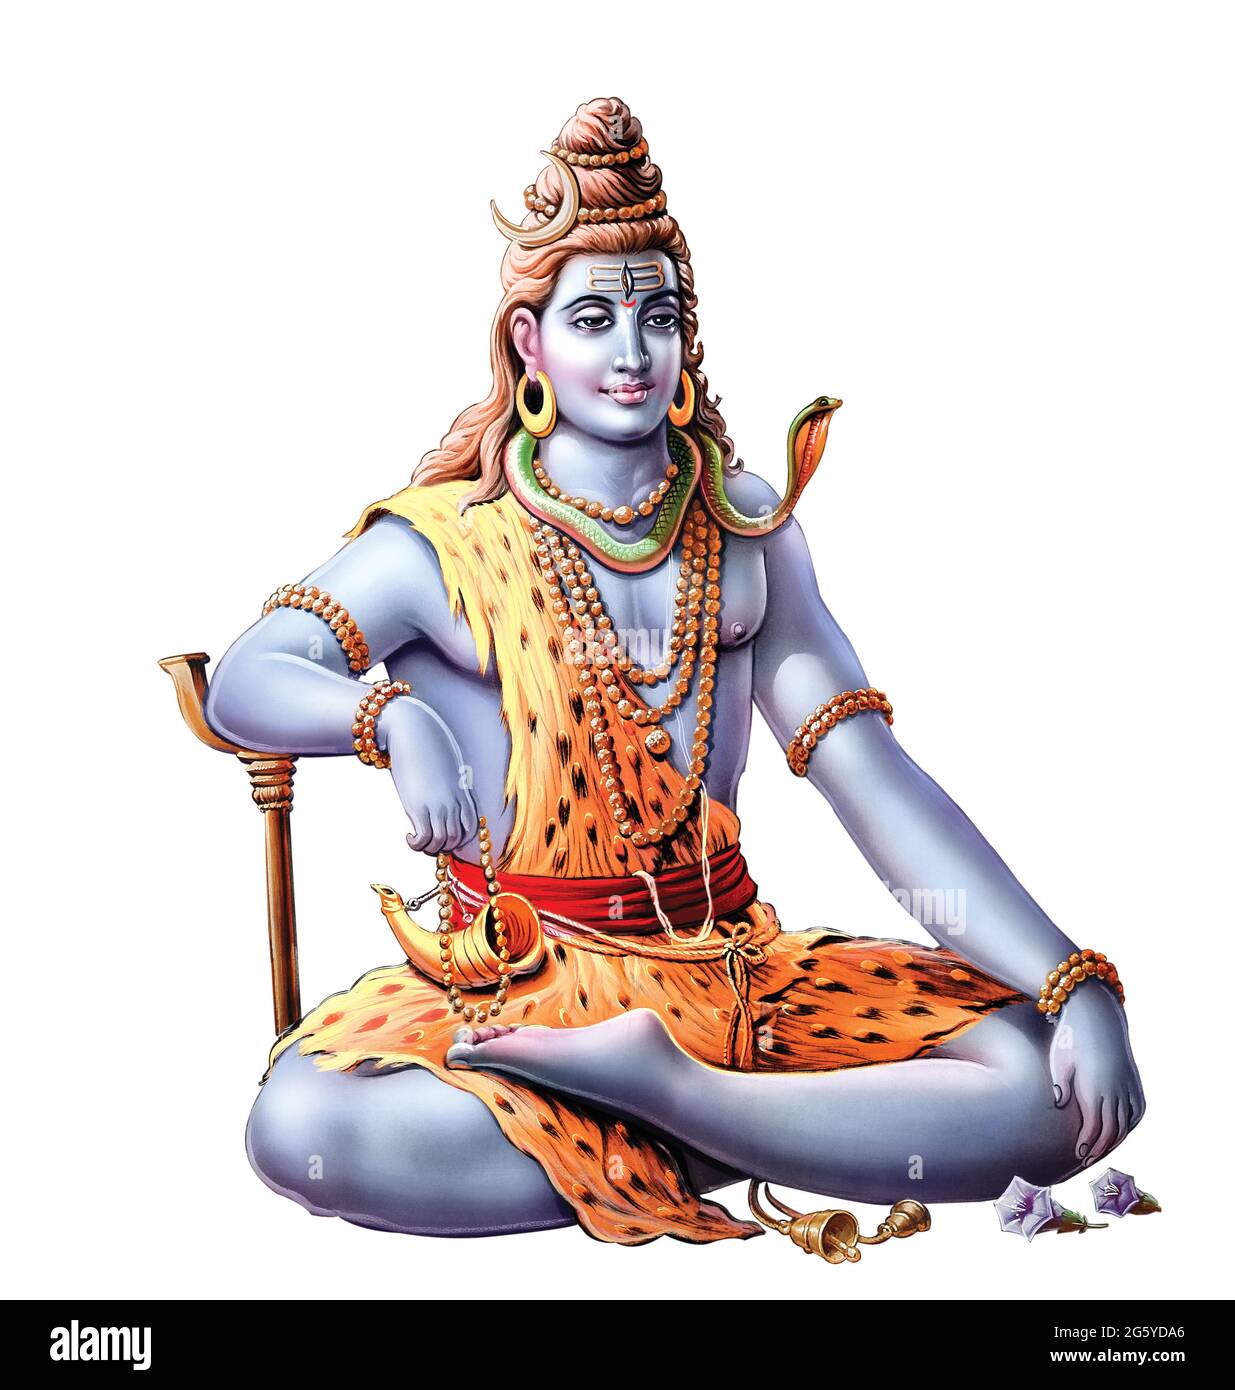 High Resolution Hindu Mythology Picture of Lord Shiva Stock Photo - Alamy